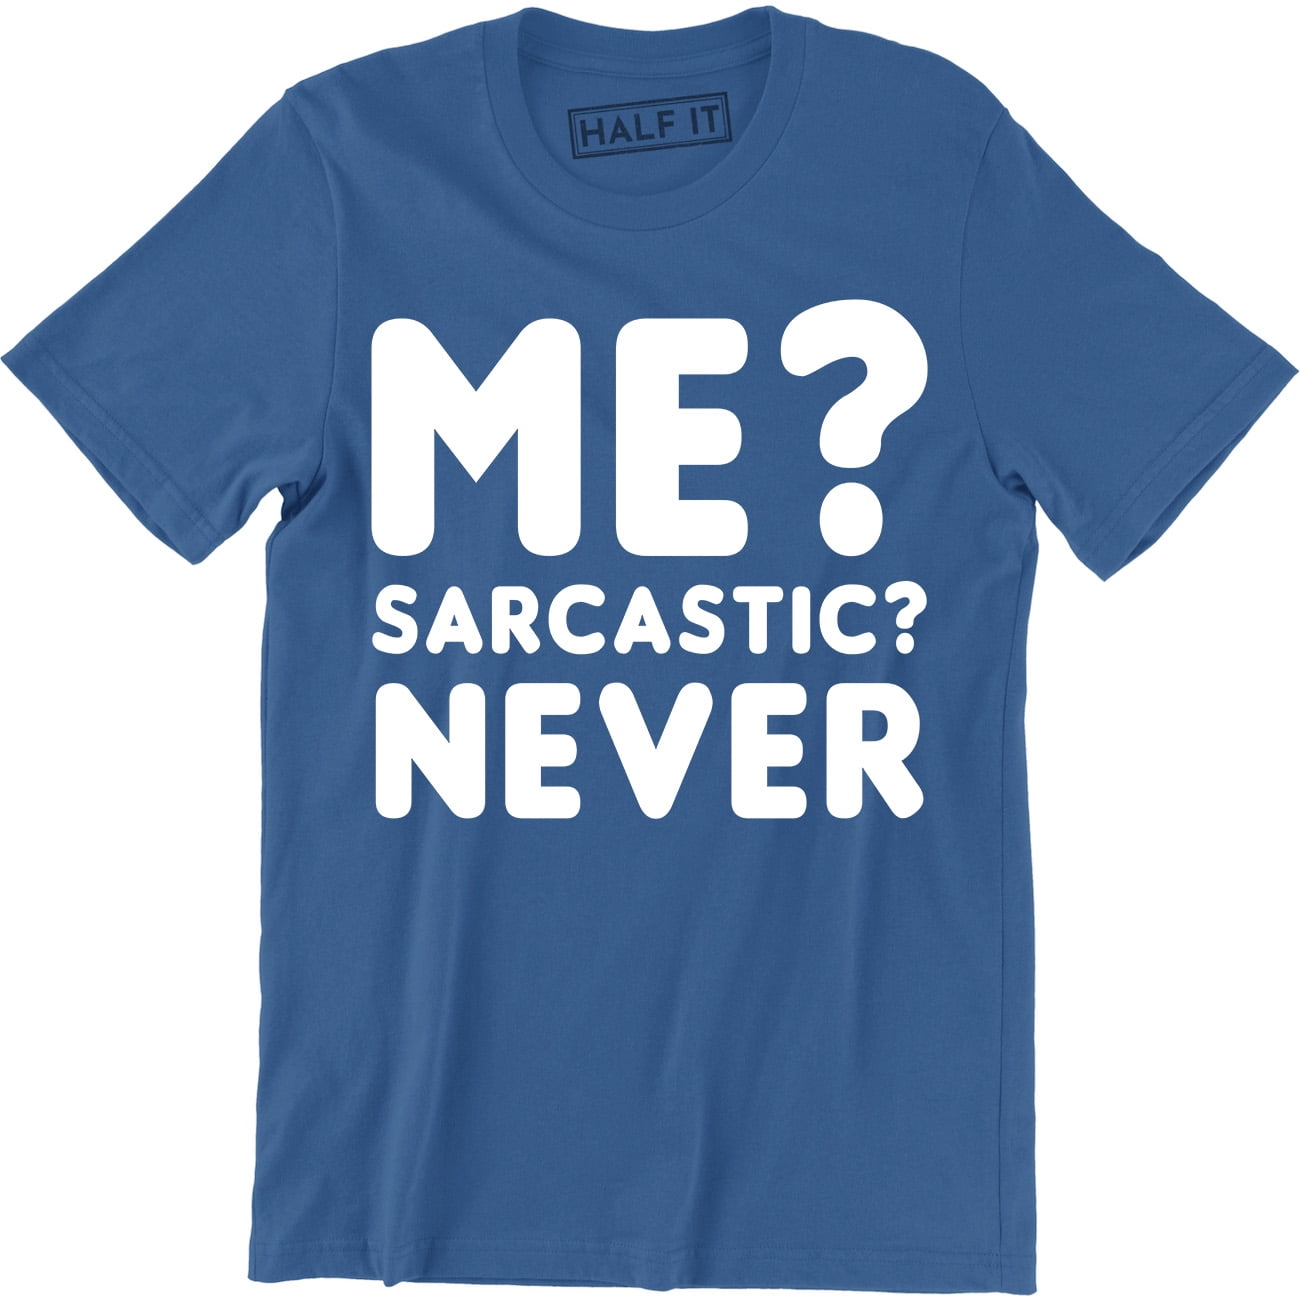 PEOPLE SKILLS Funny Mens T-Shirt sarcastic gift sarcasm humor joke tee